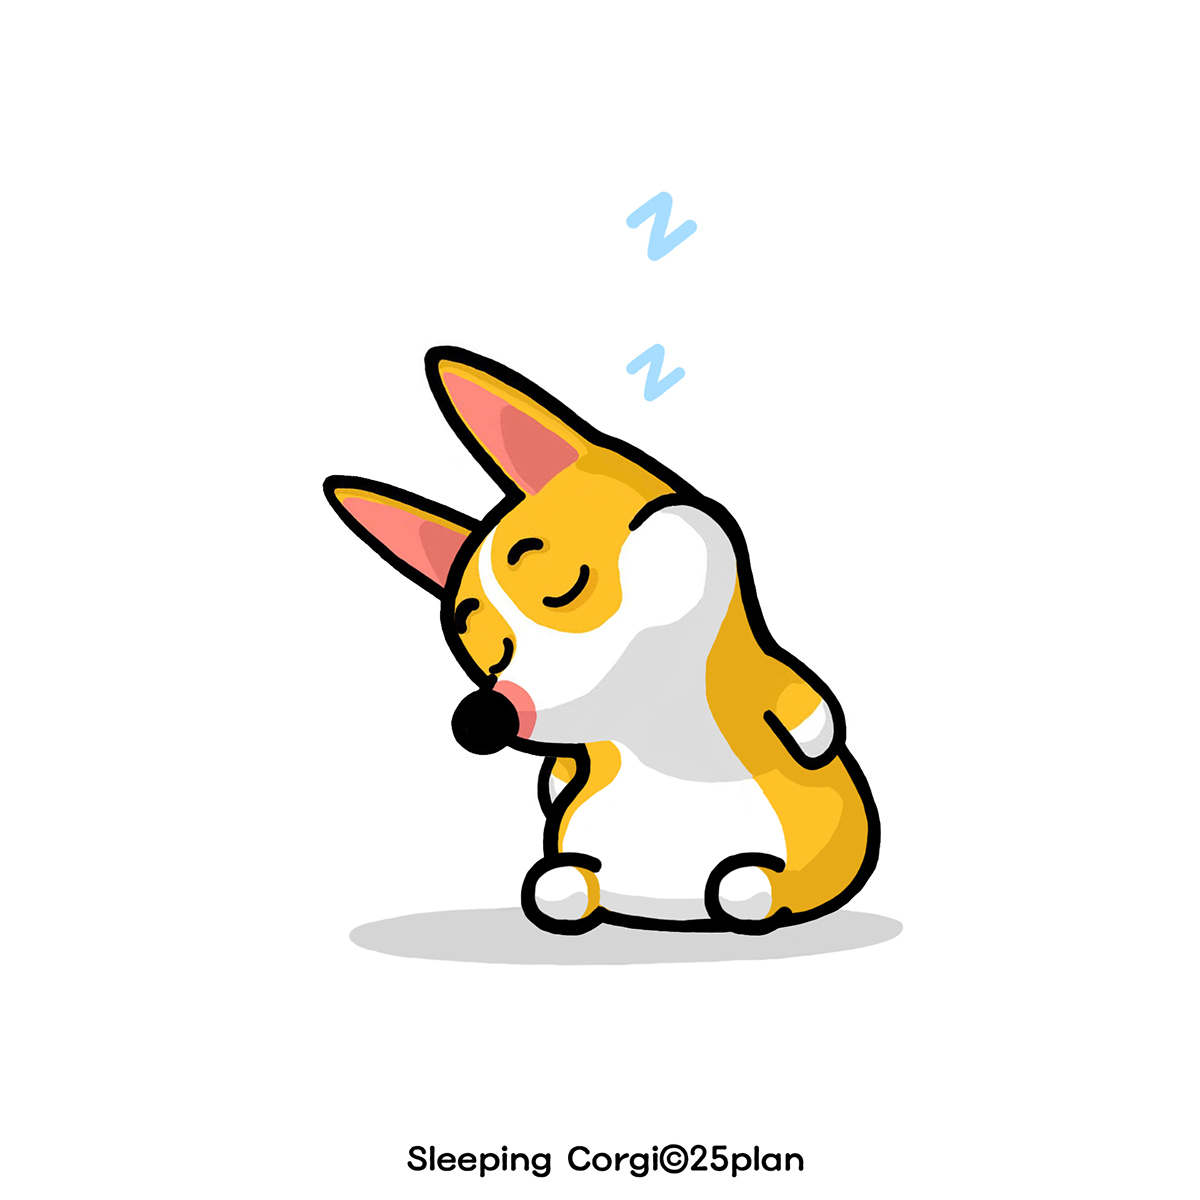 Sleeping Corgi artwork image pattern Welshcorgi dog funny cute